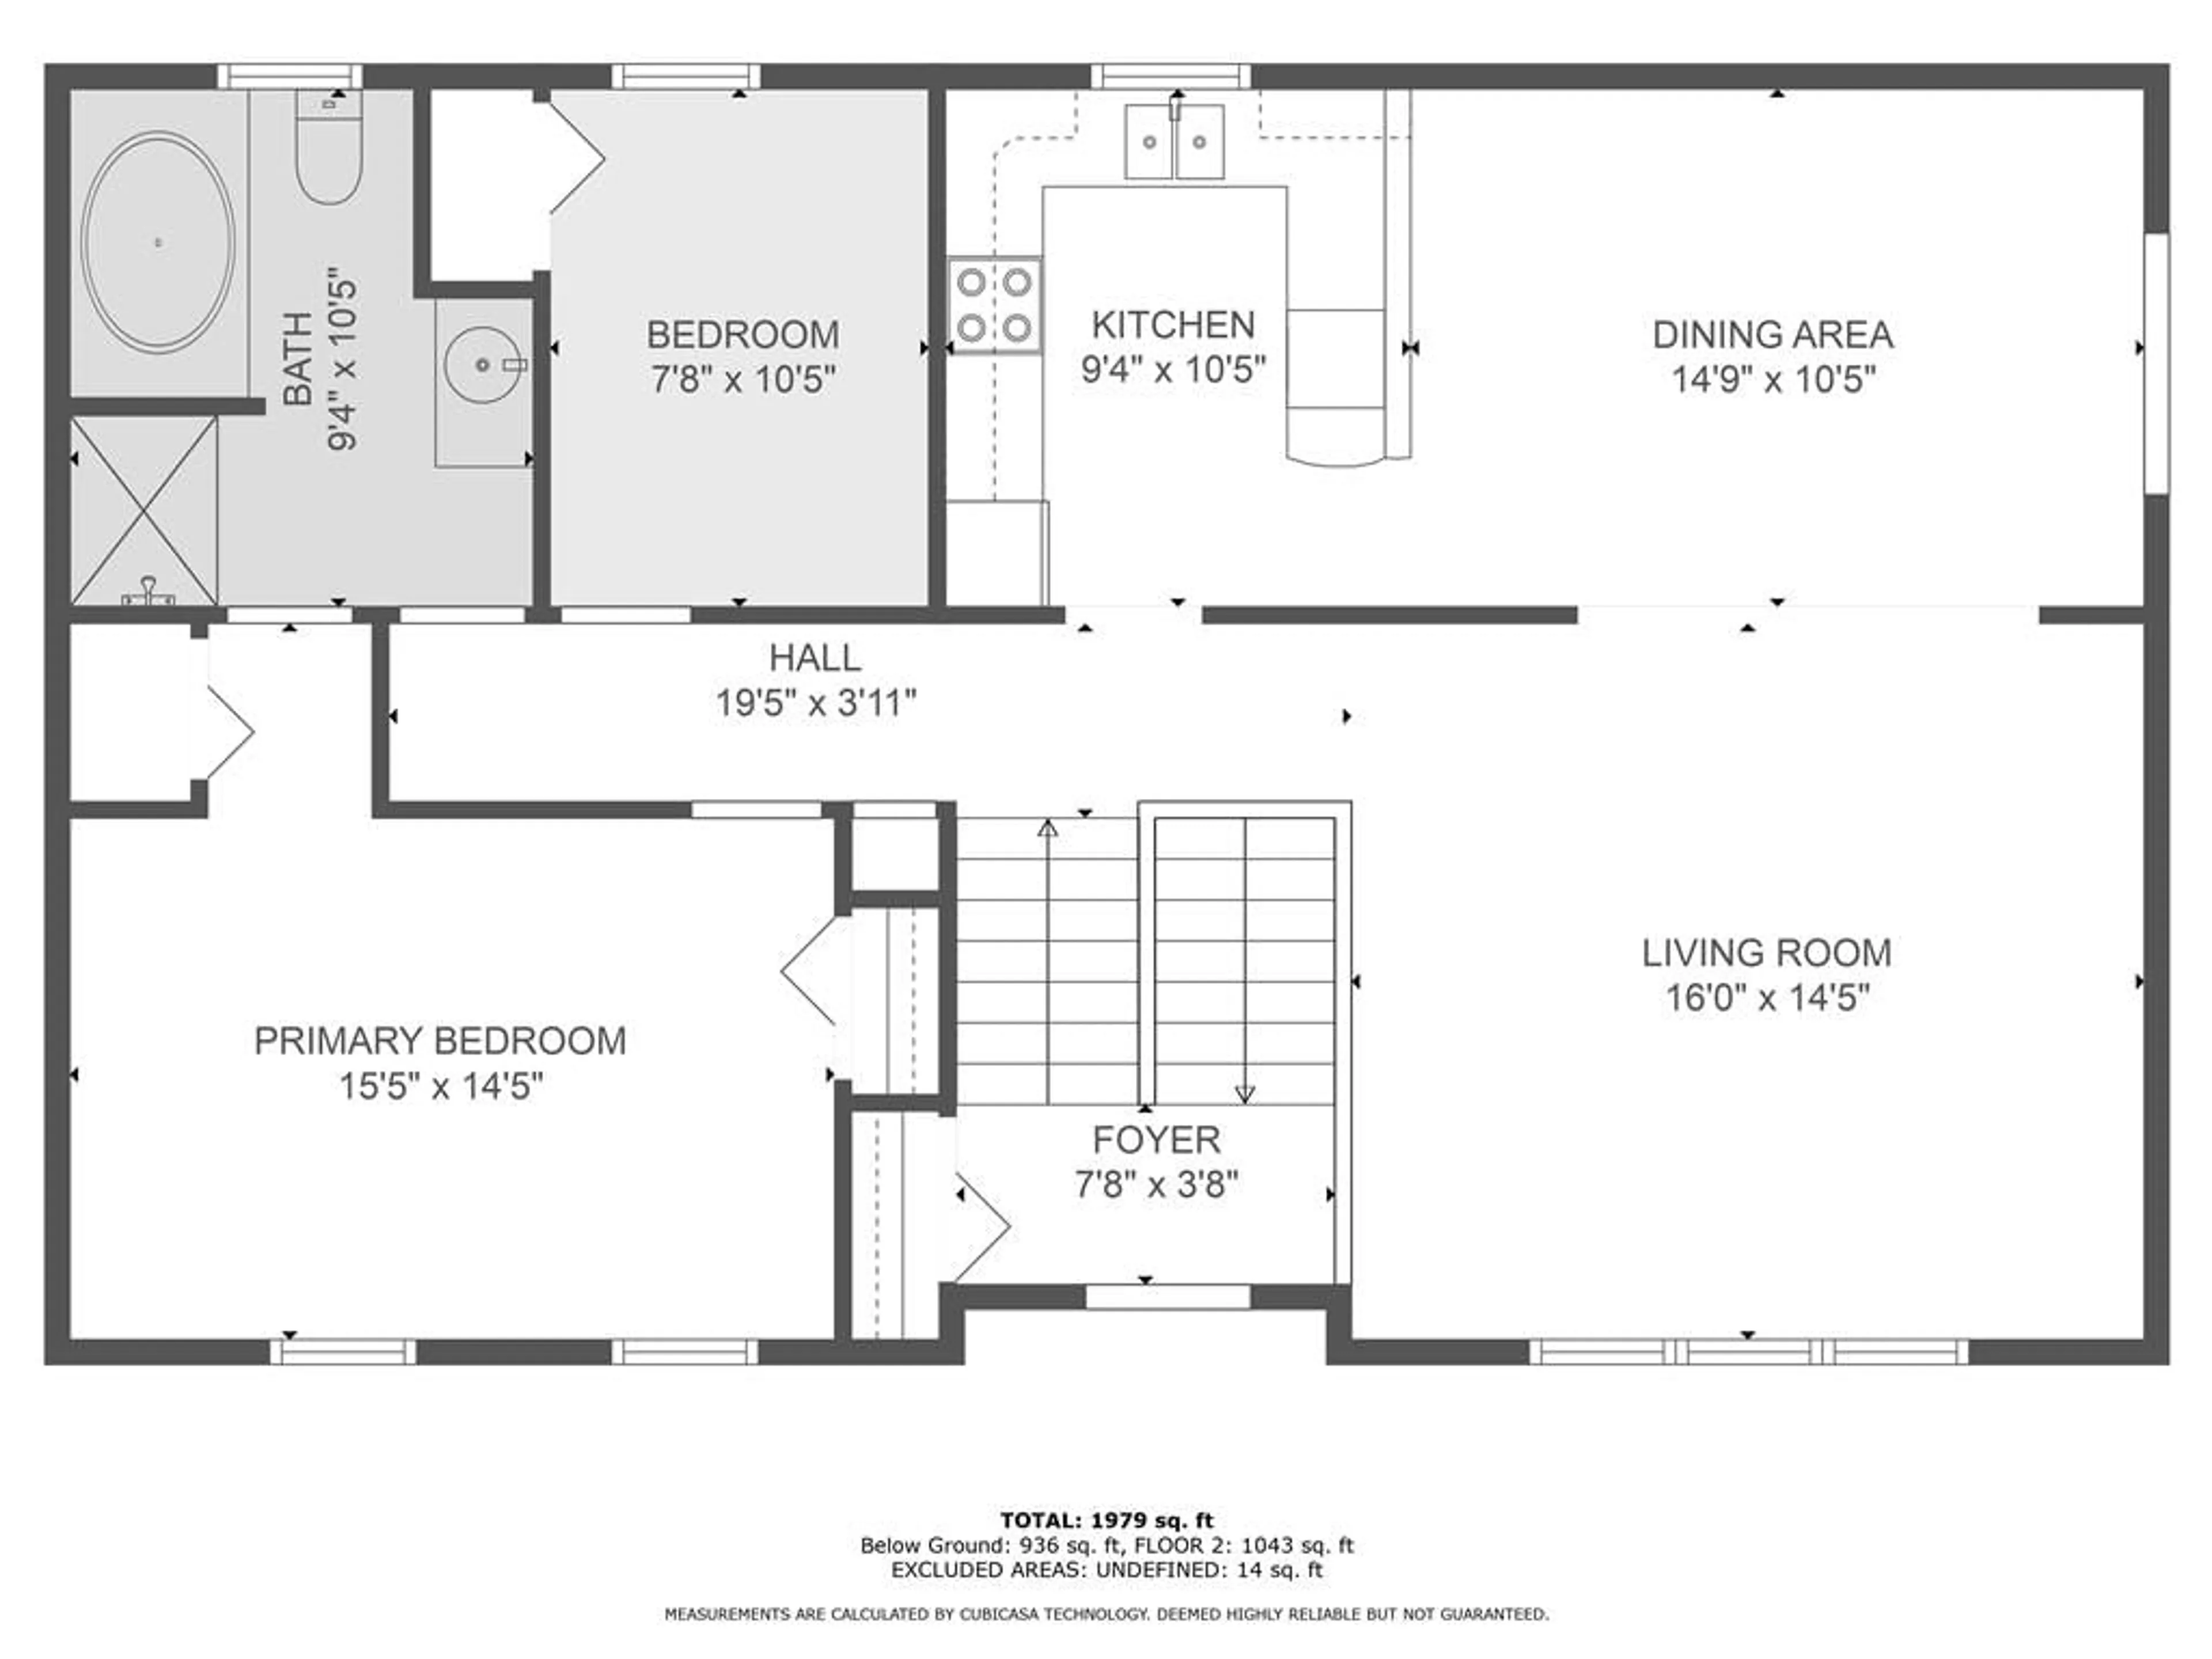 Floor plan for 409 WALLRICH Ave, Cornwall Ontario K6J 2B4